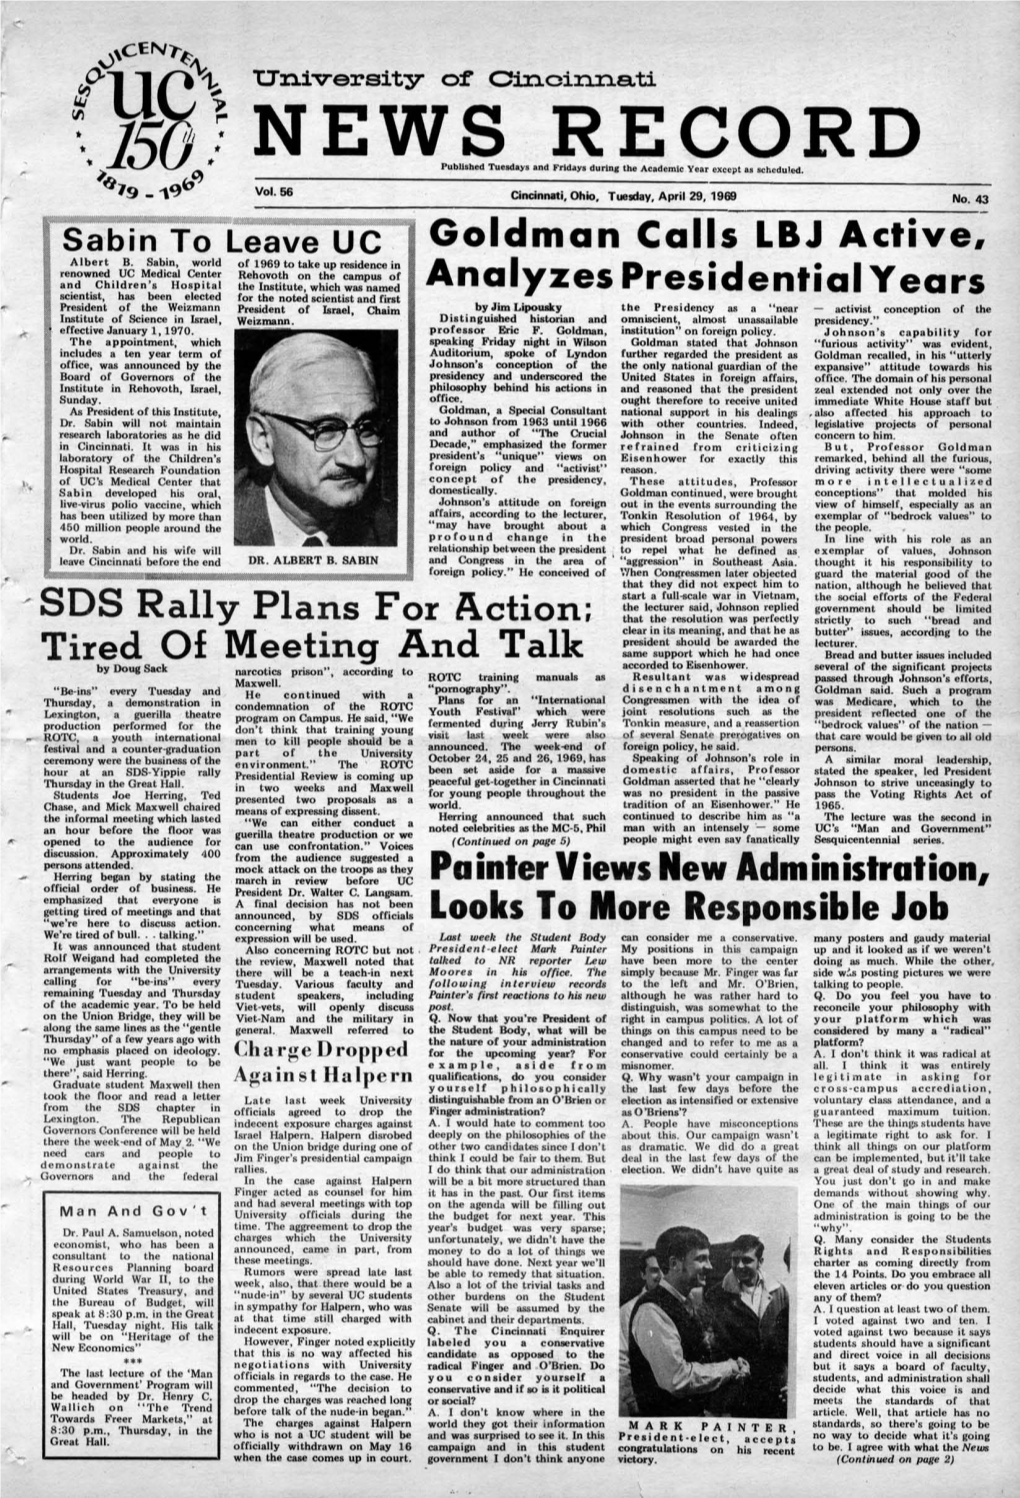 University of Cincinnati News Record. Tuesday, April 29, 1969. Vol. LVI